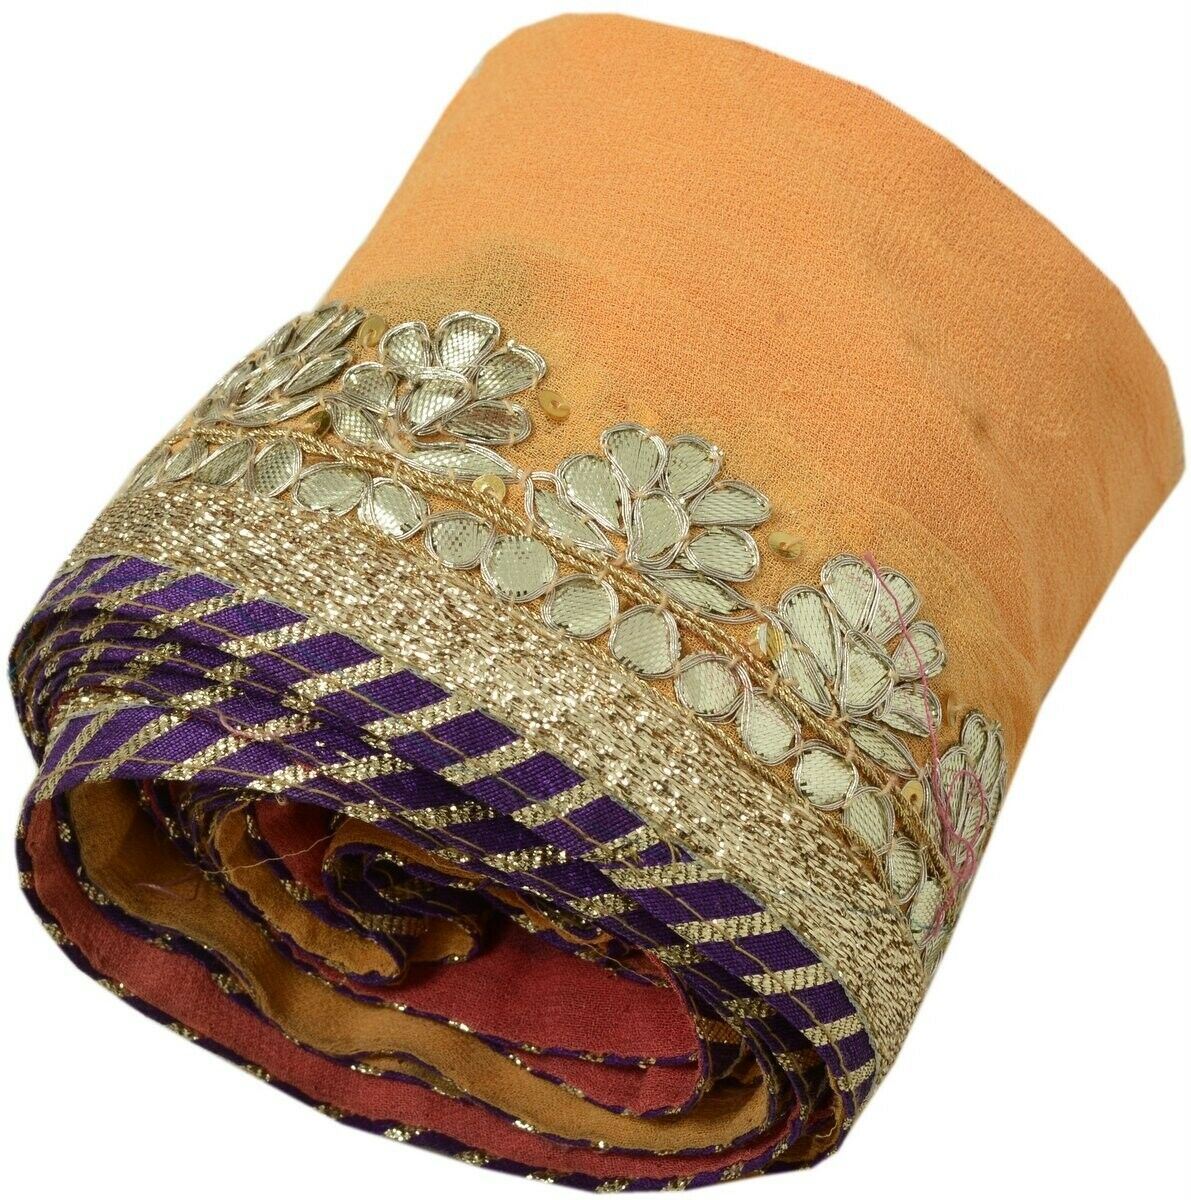 Vintage Sari Border Antique Craft Trim Hand Beaded Gota Pattin Ribbon Lace Peach